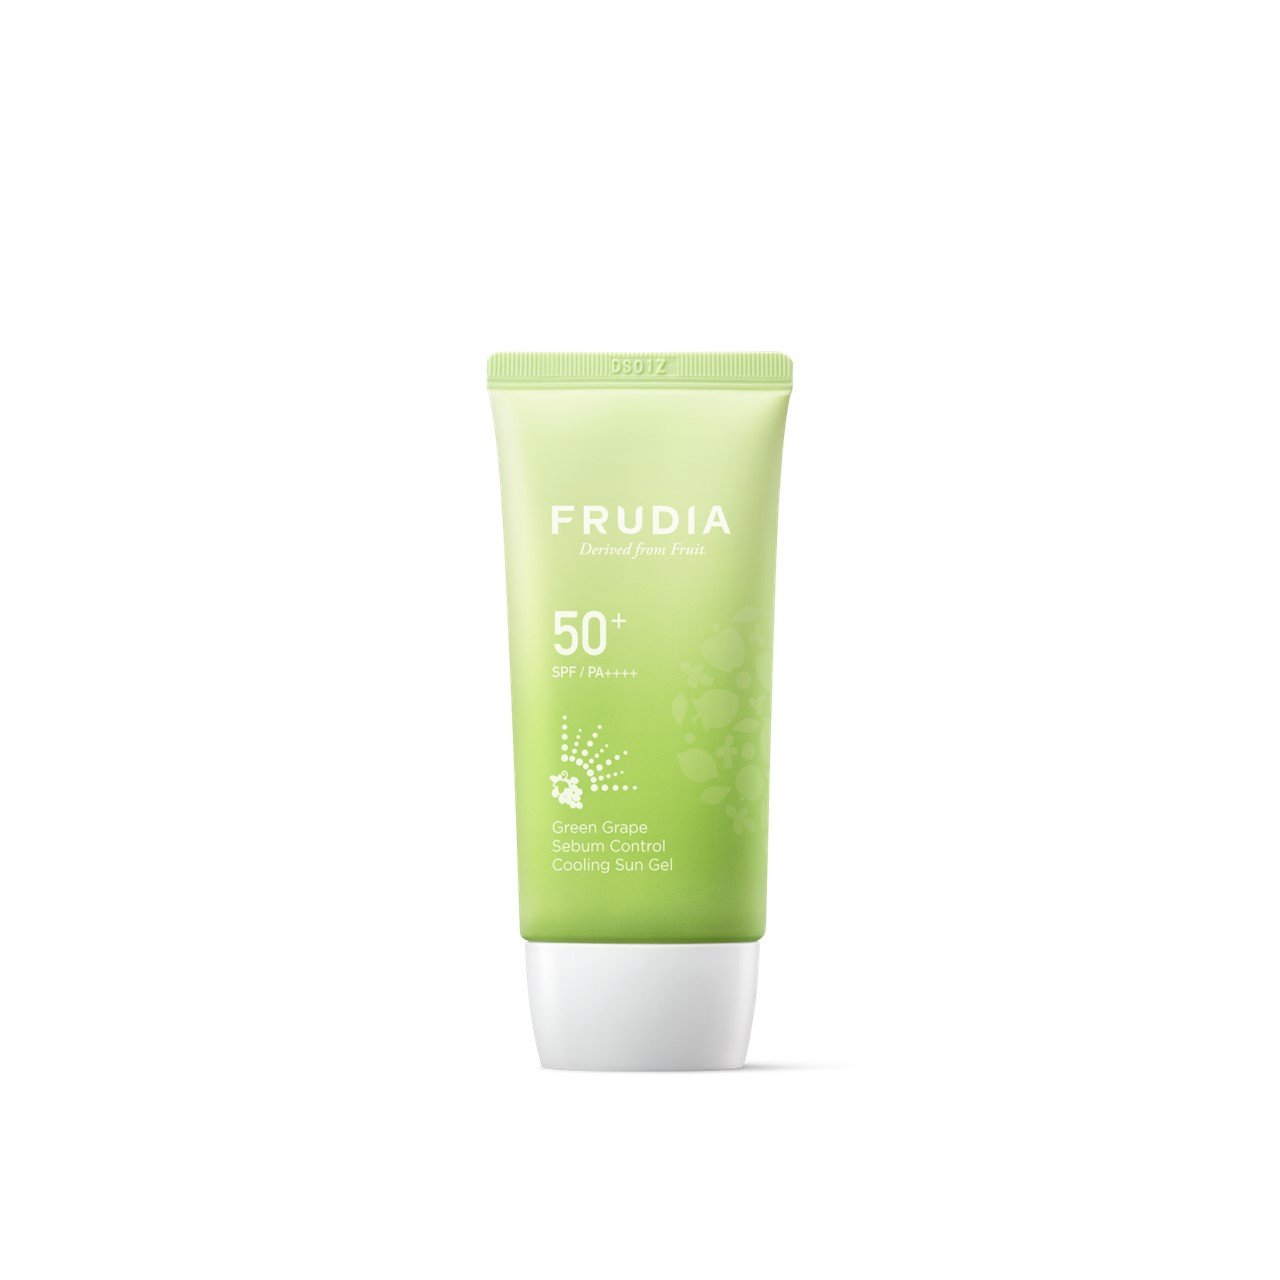 Frudia Green Grape Sebum Control Cooling Sun Gel SPF50+ 50g (1.76oz)